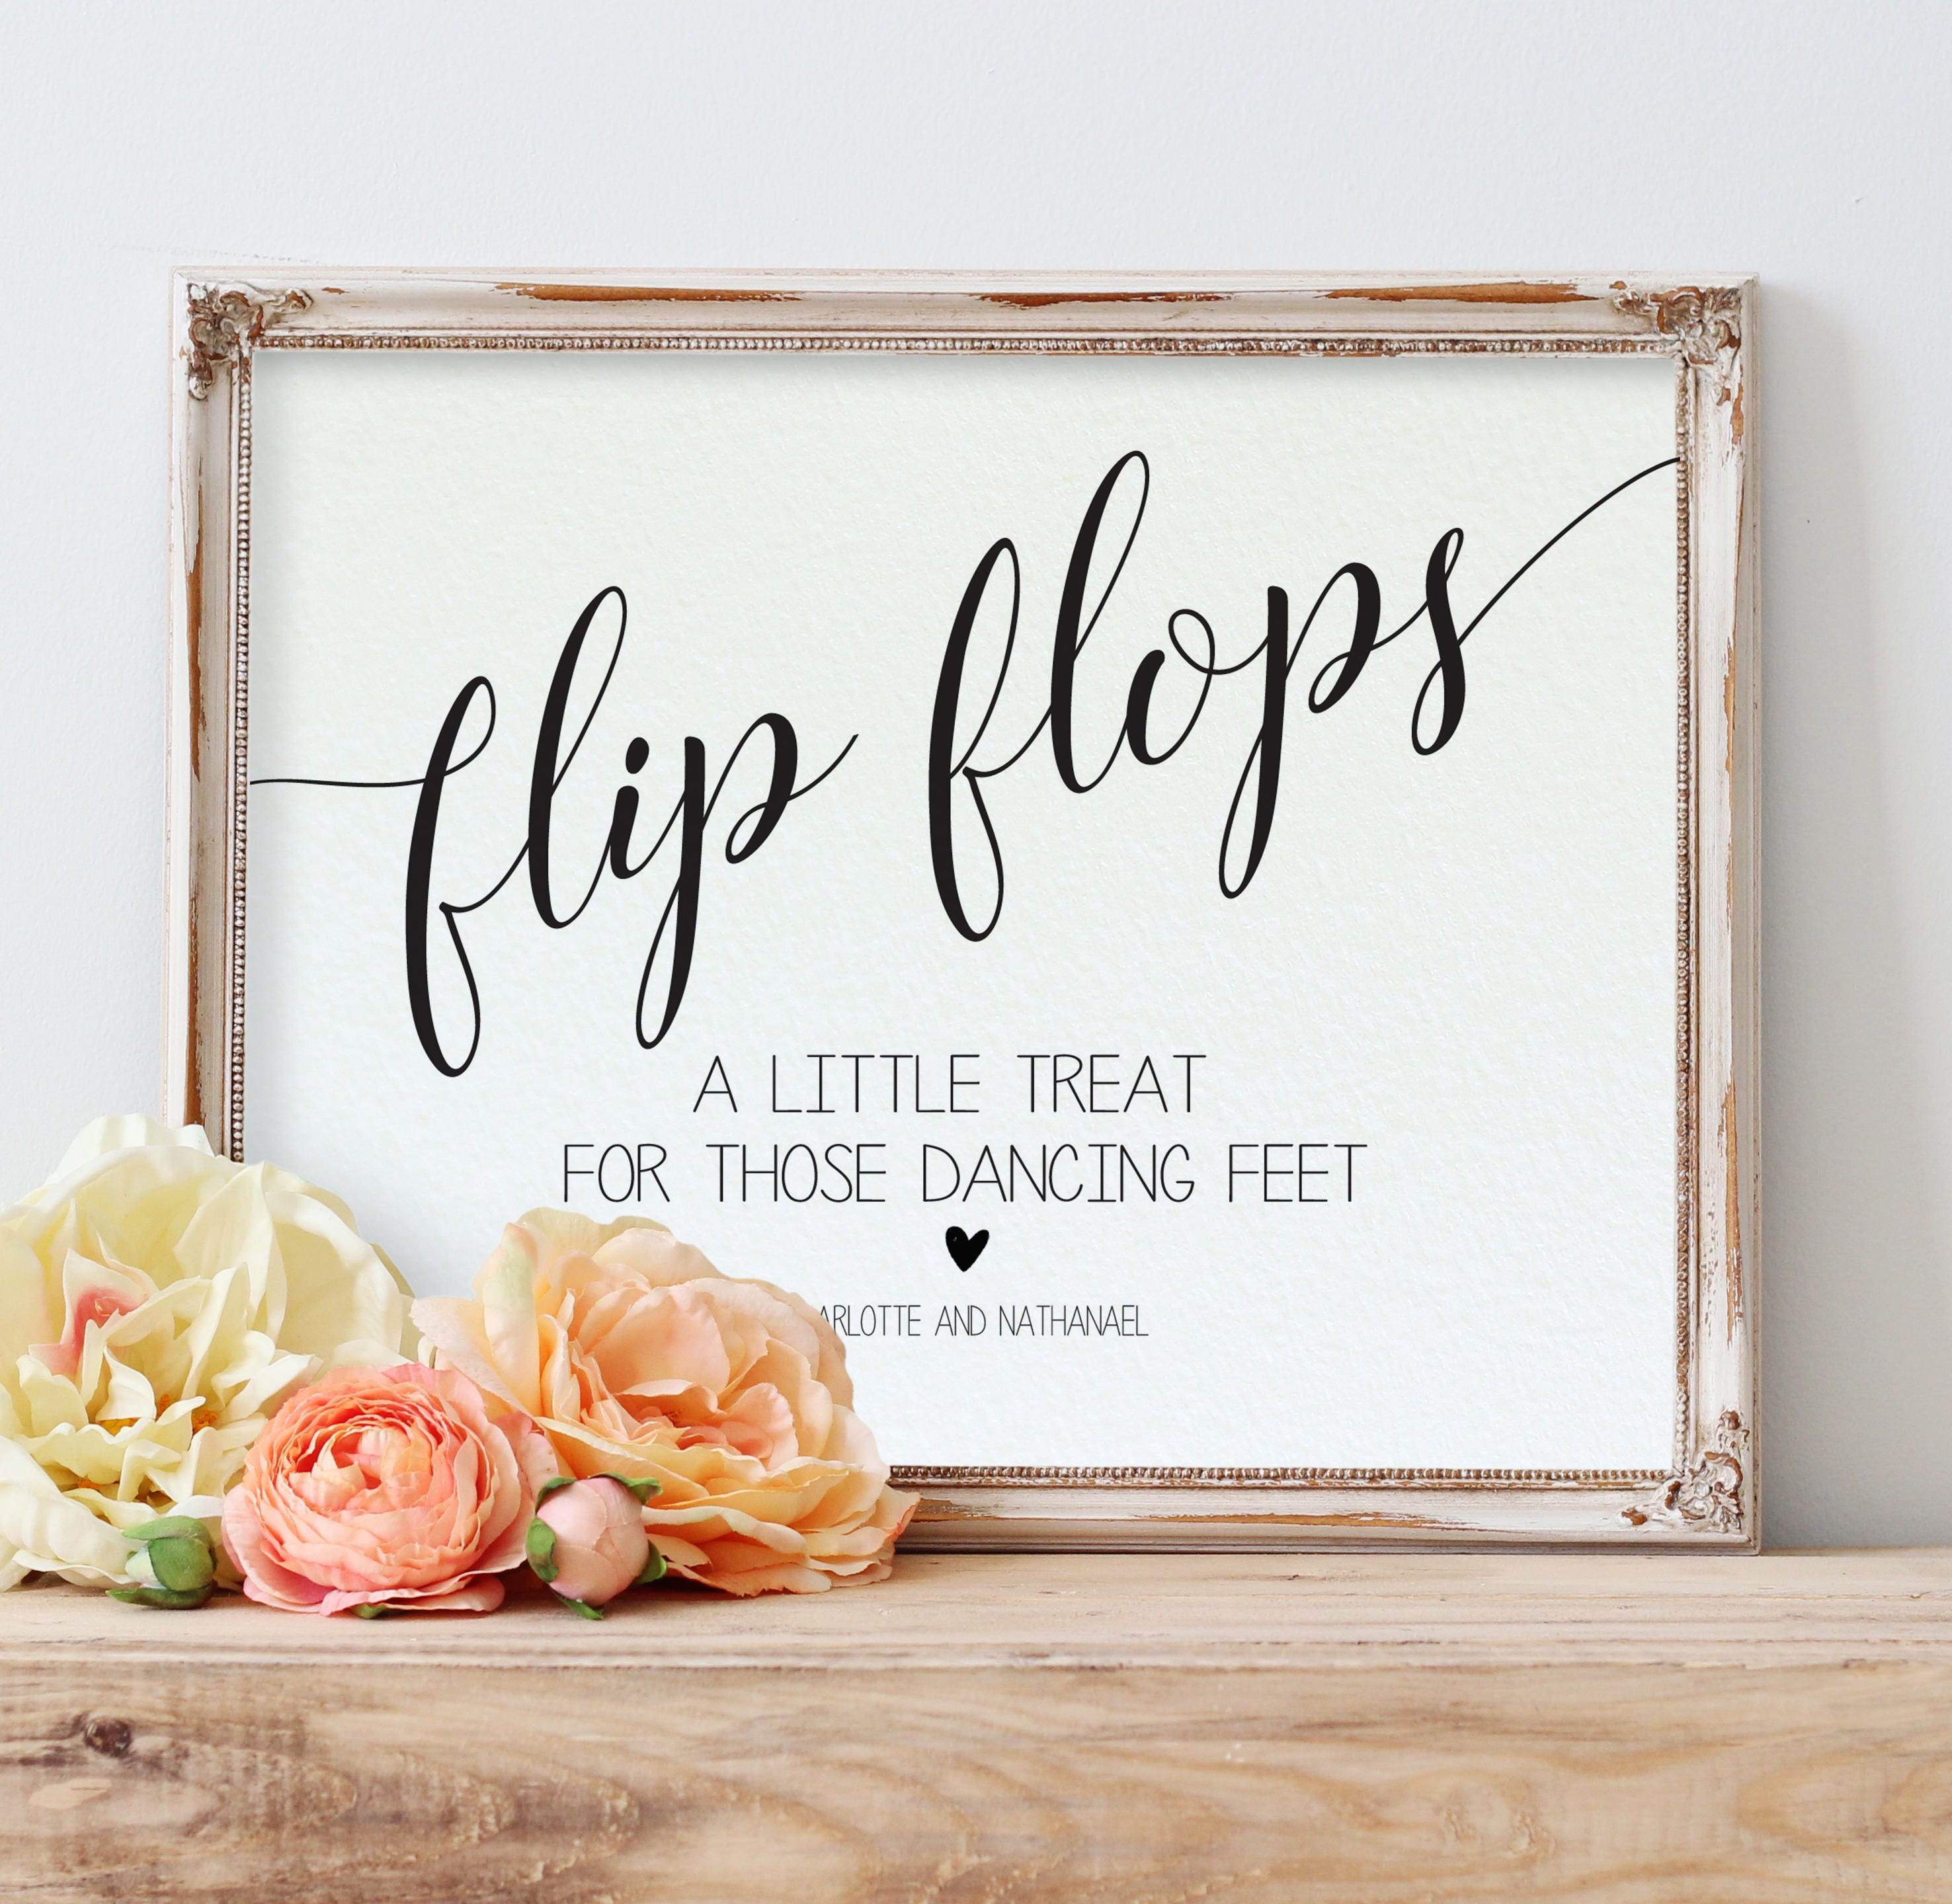 Flip Flop Printable